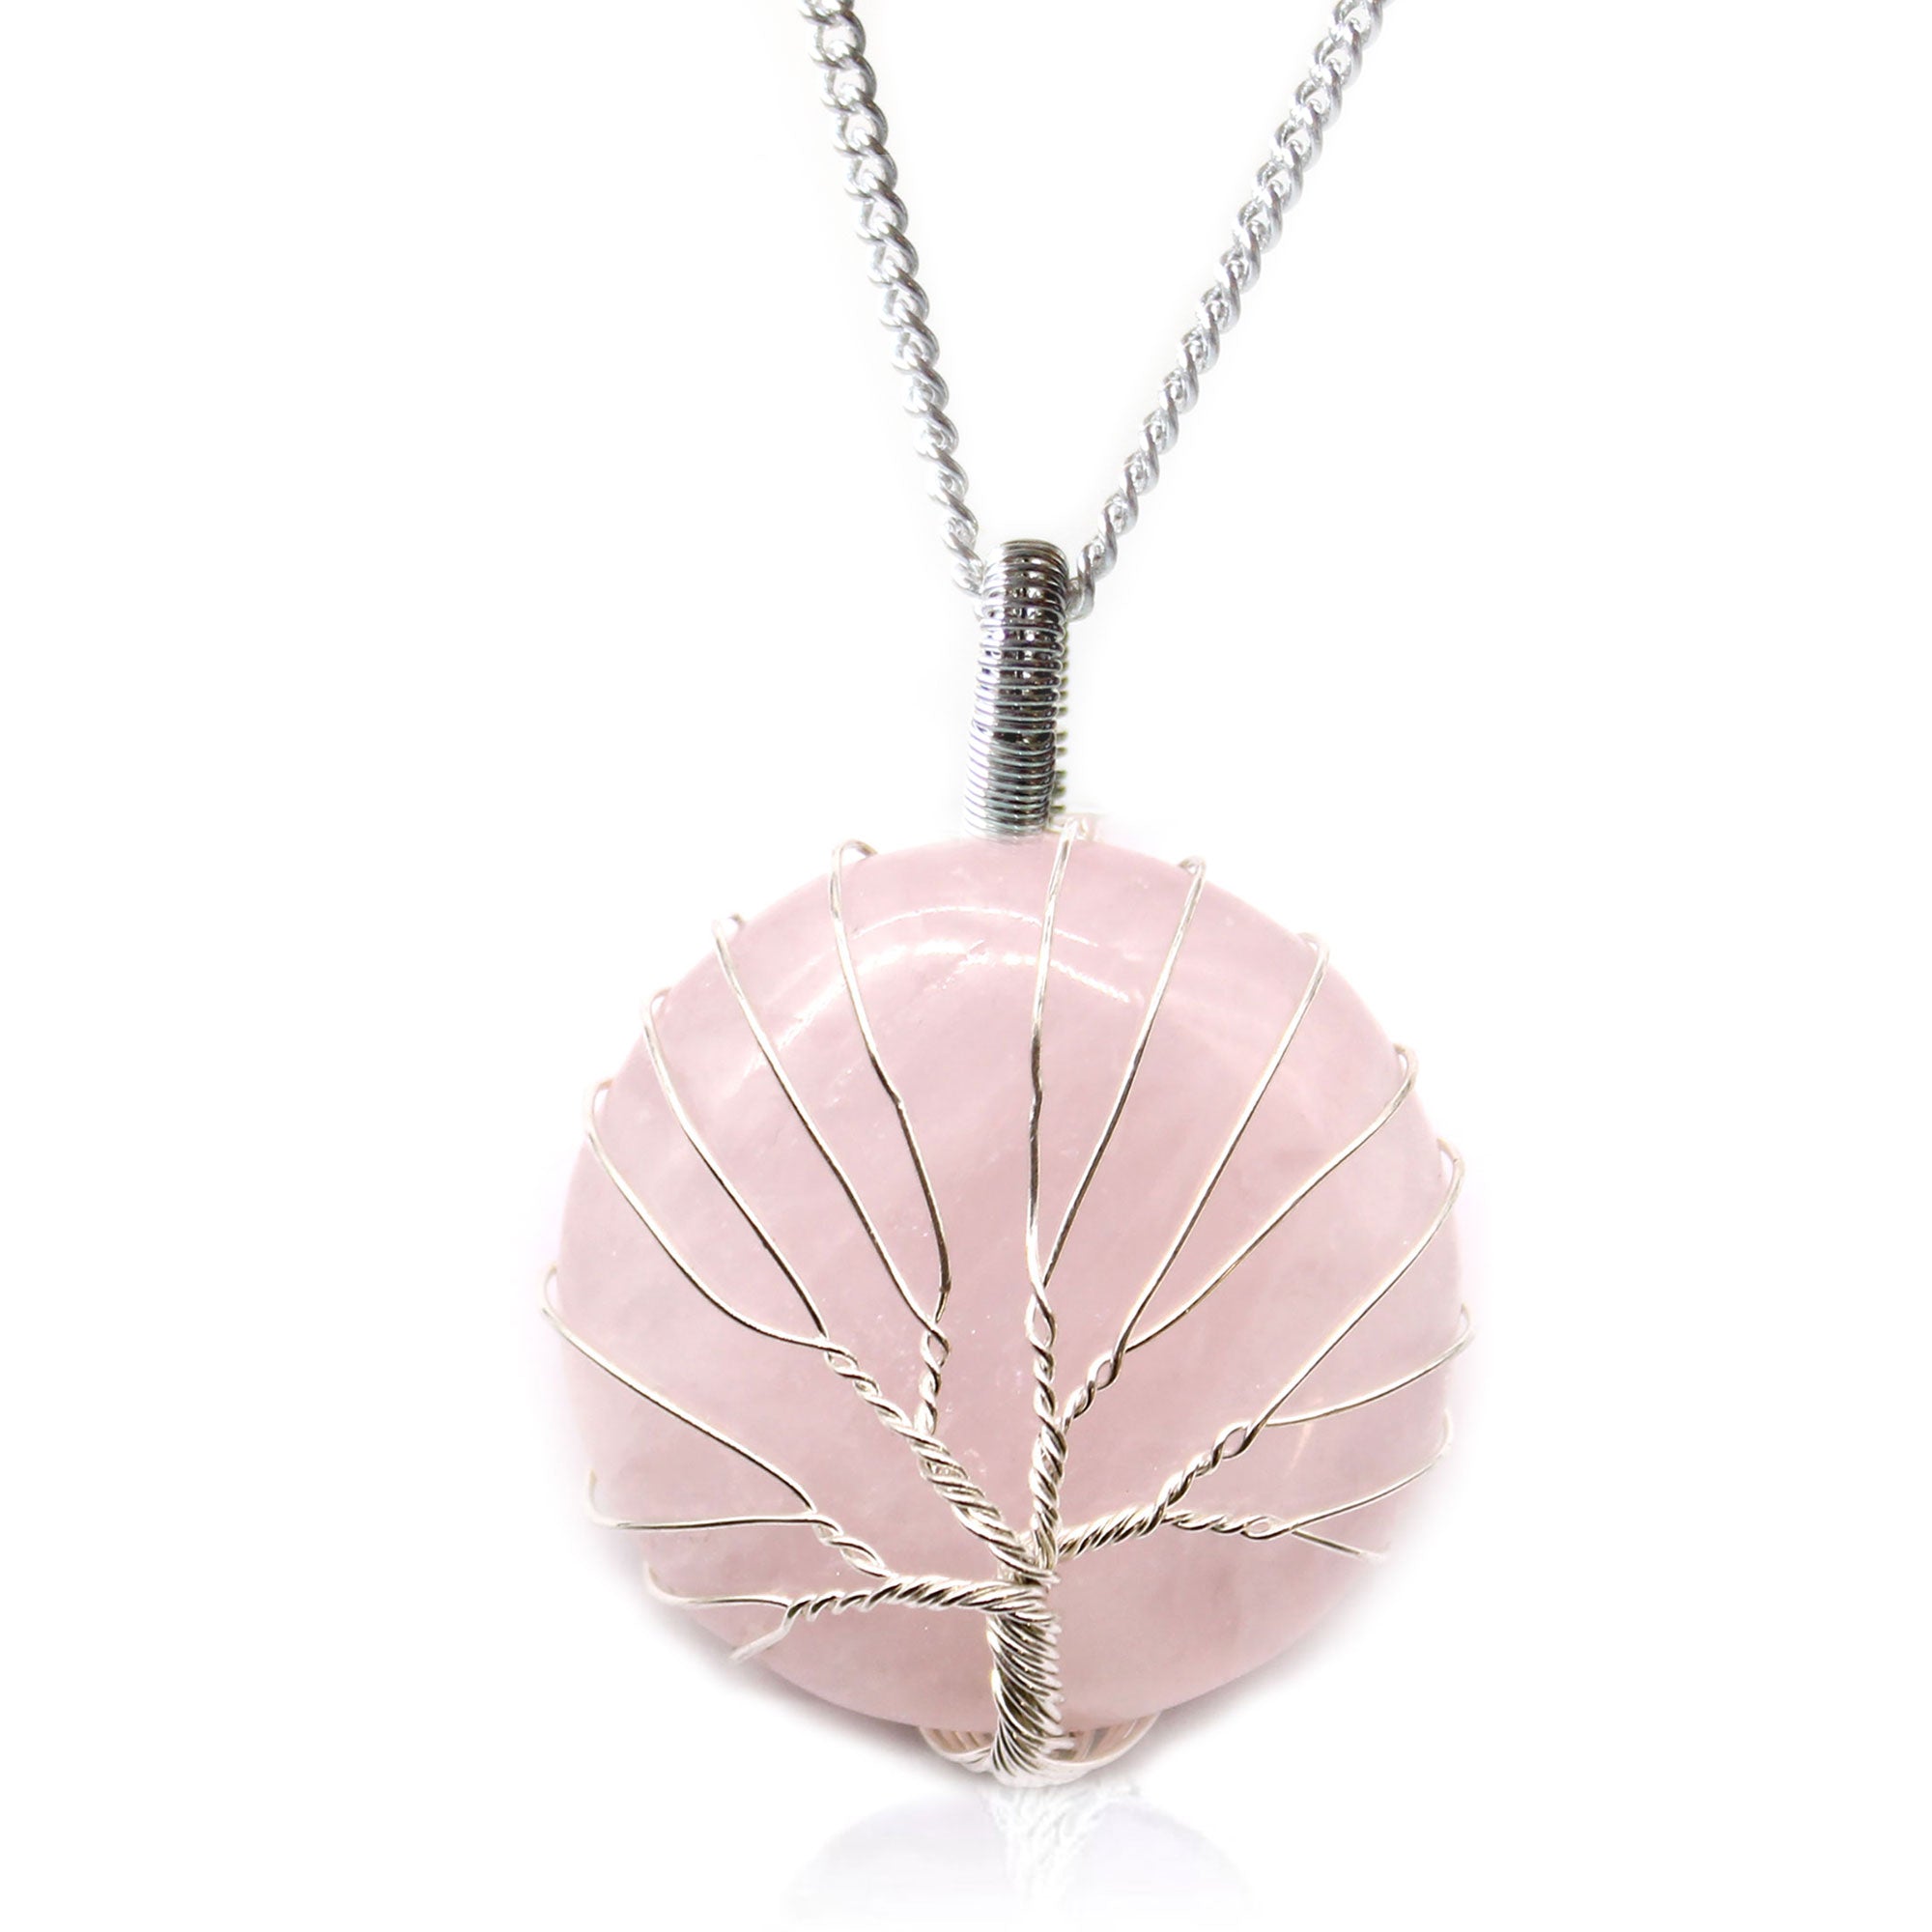 View Tree of Life Gemstone Necklace Rose Quartz information